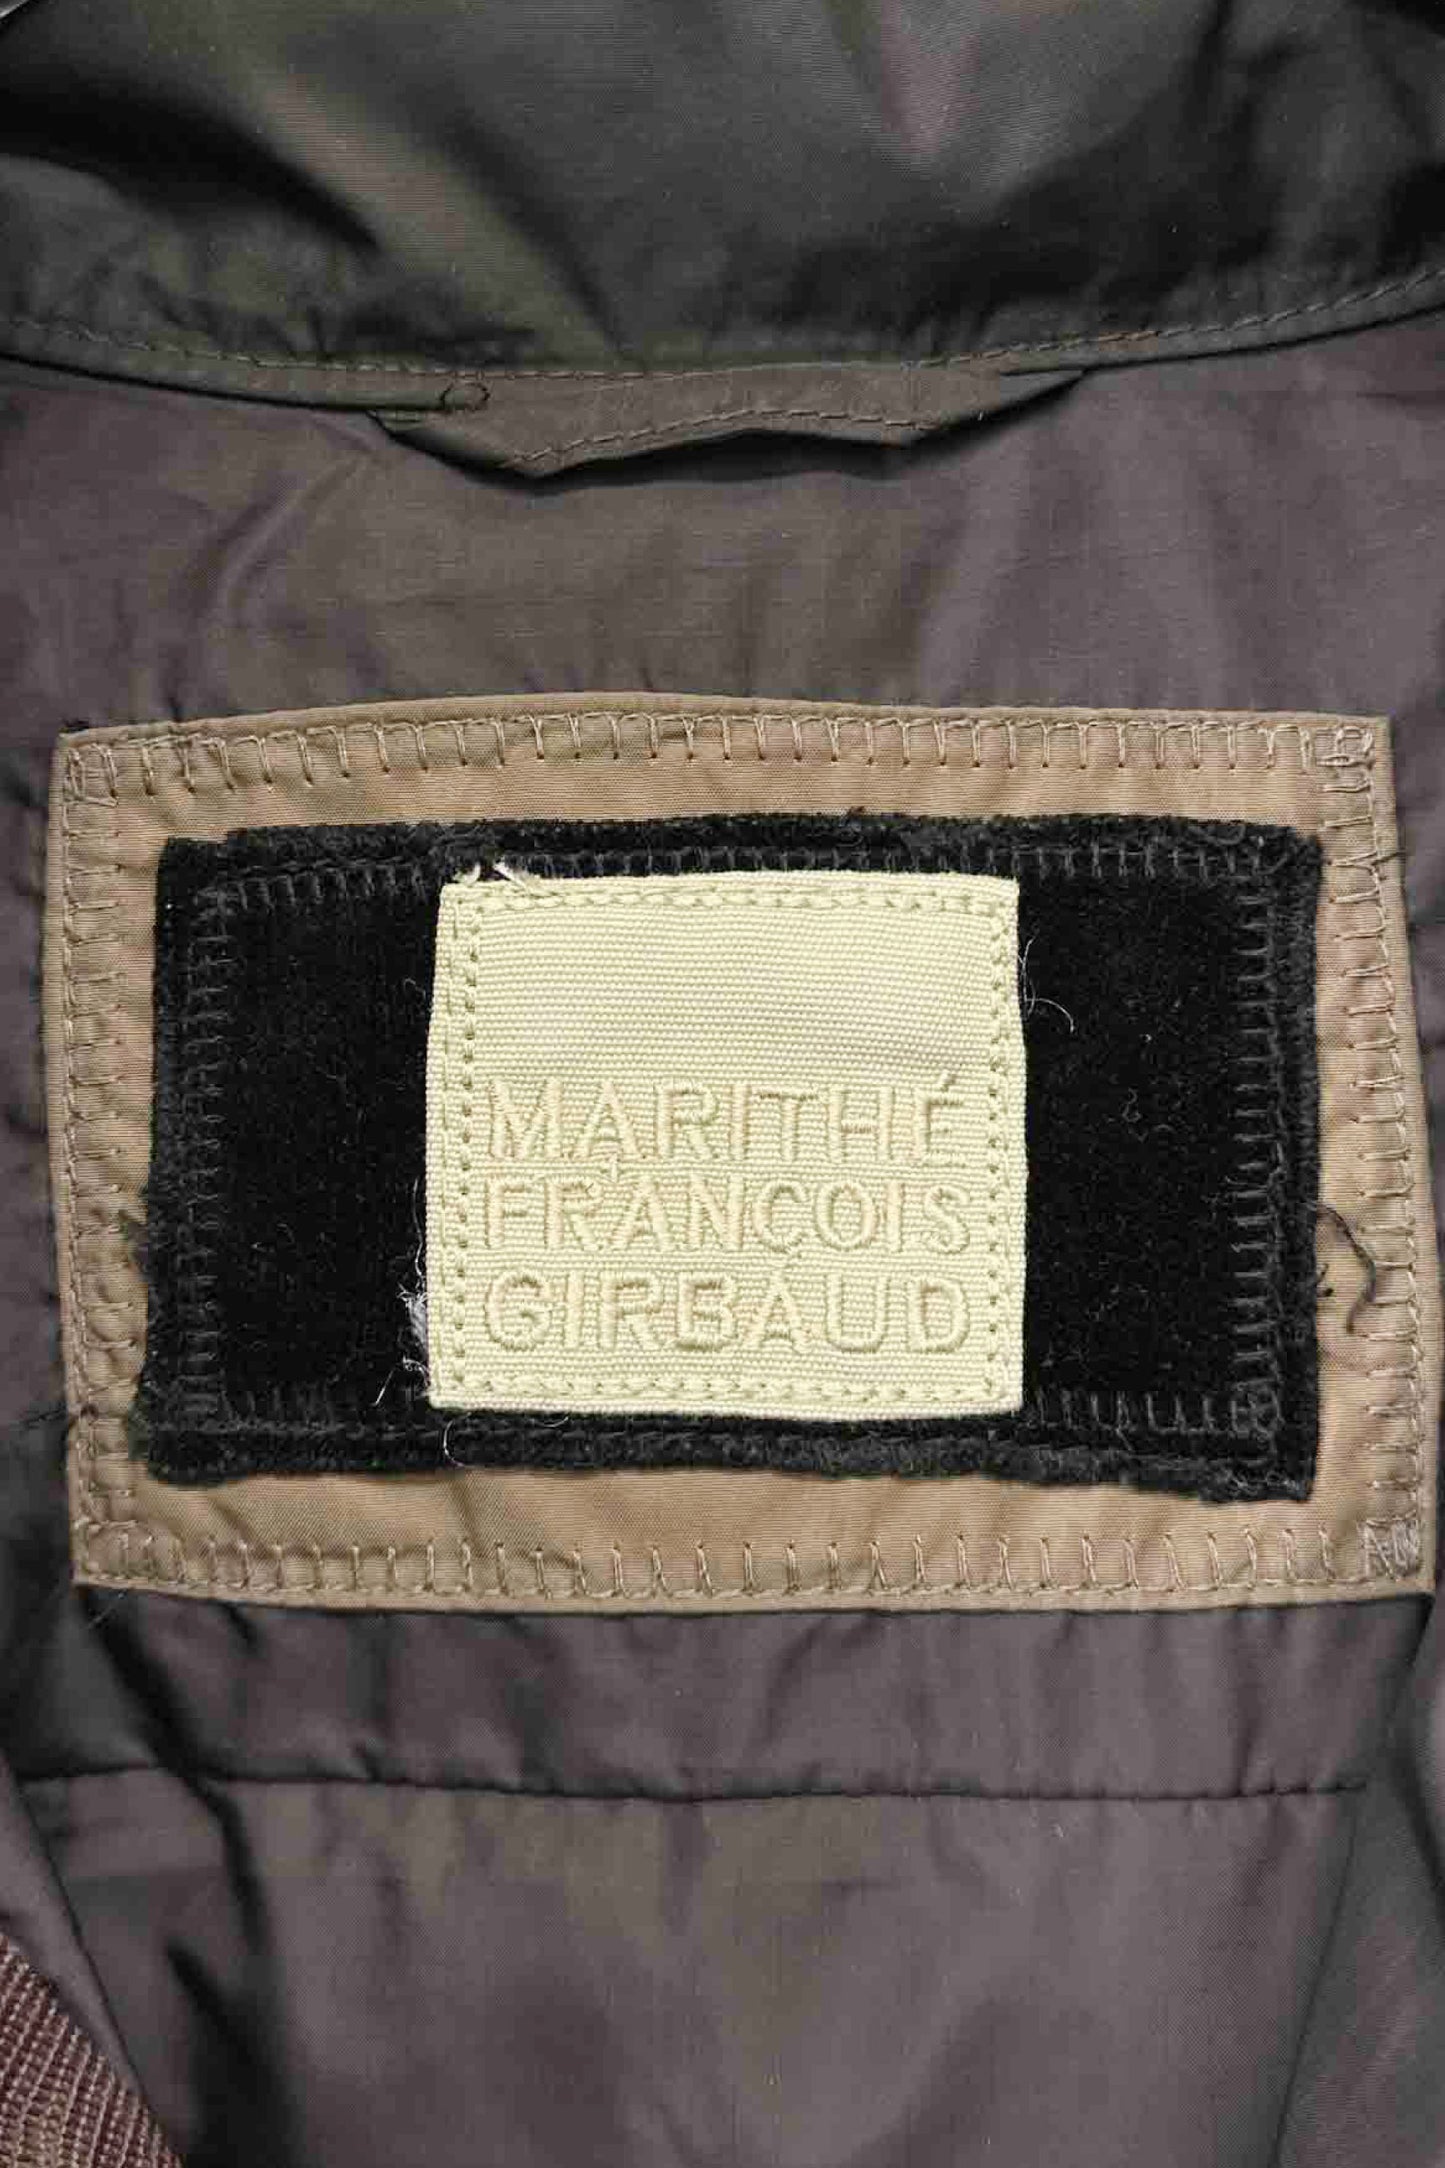 MARITHE FRANCOIS GIRBAUD down jacket